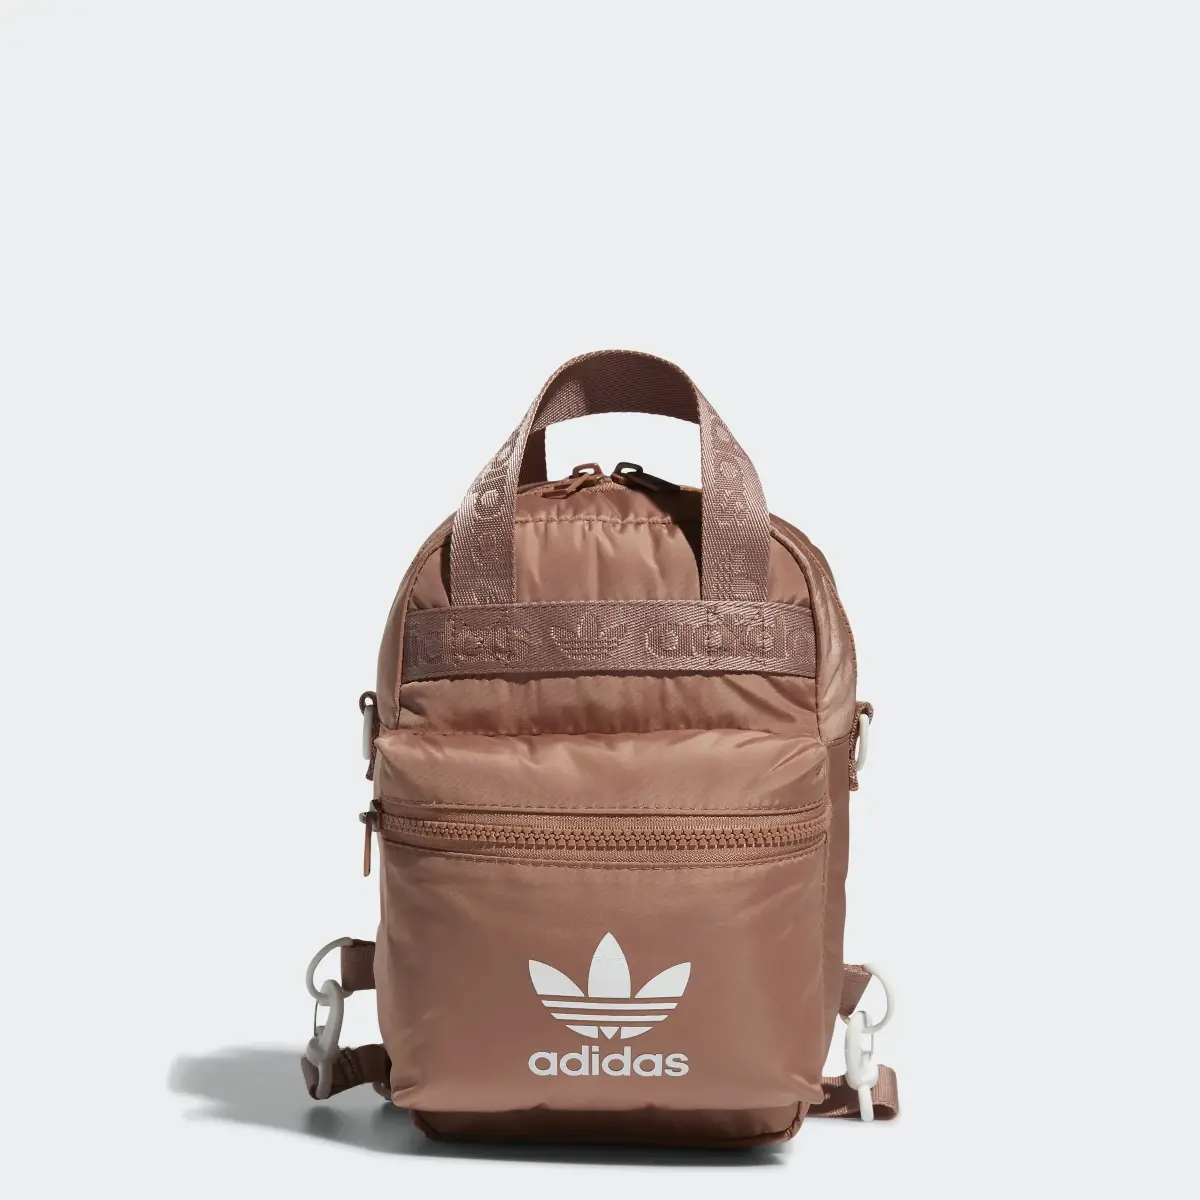 Adidas Micro Backpack. 1